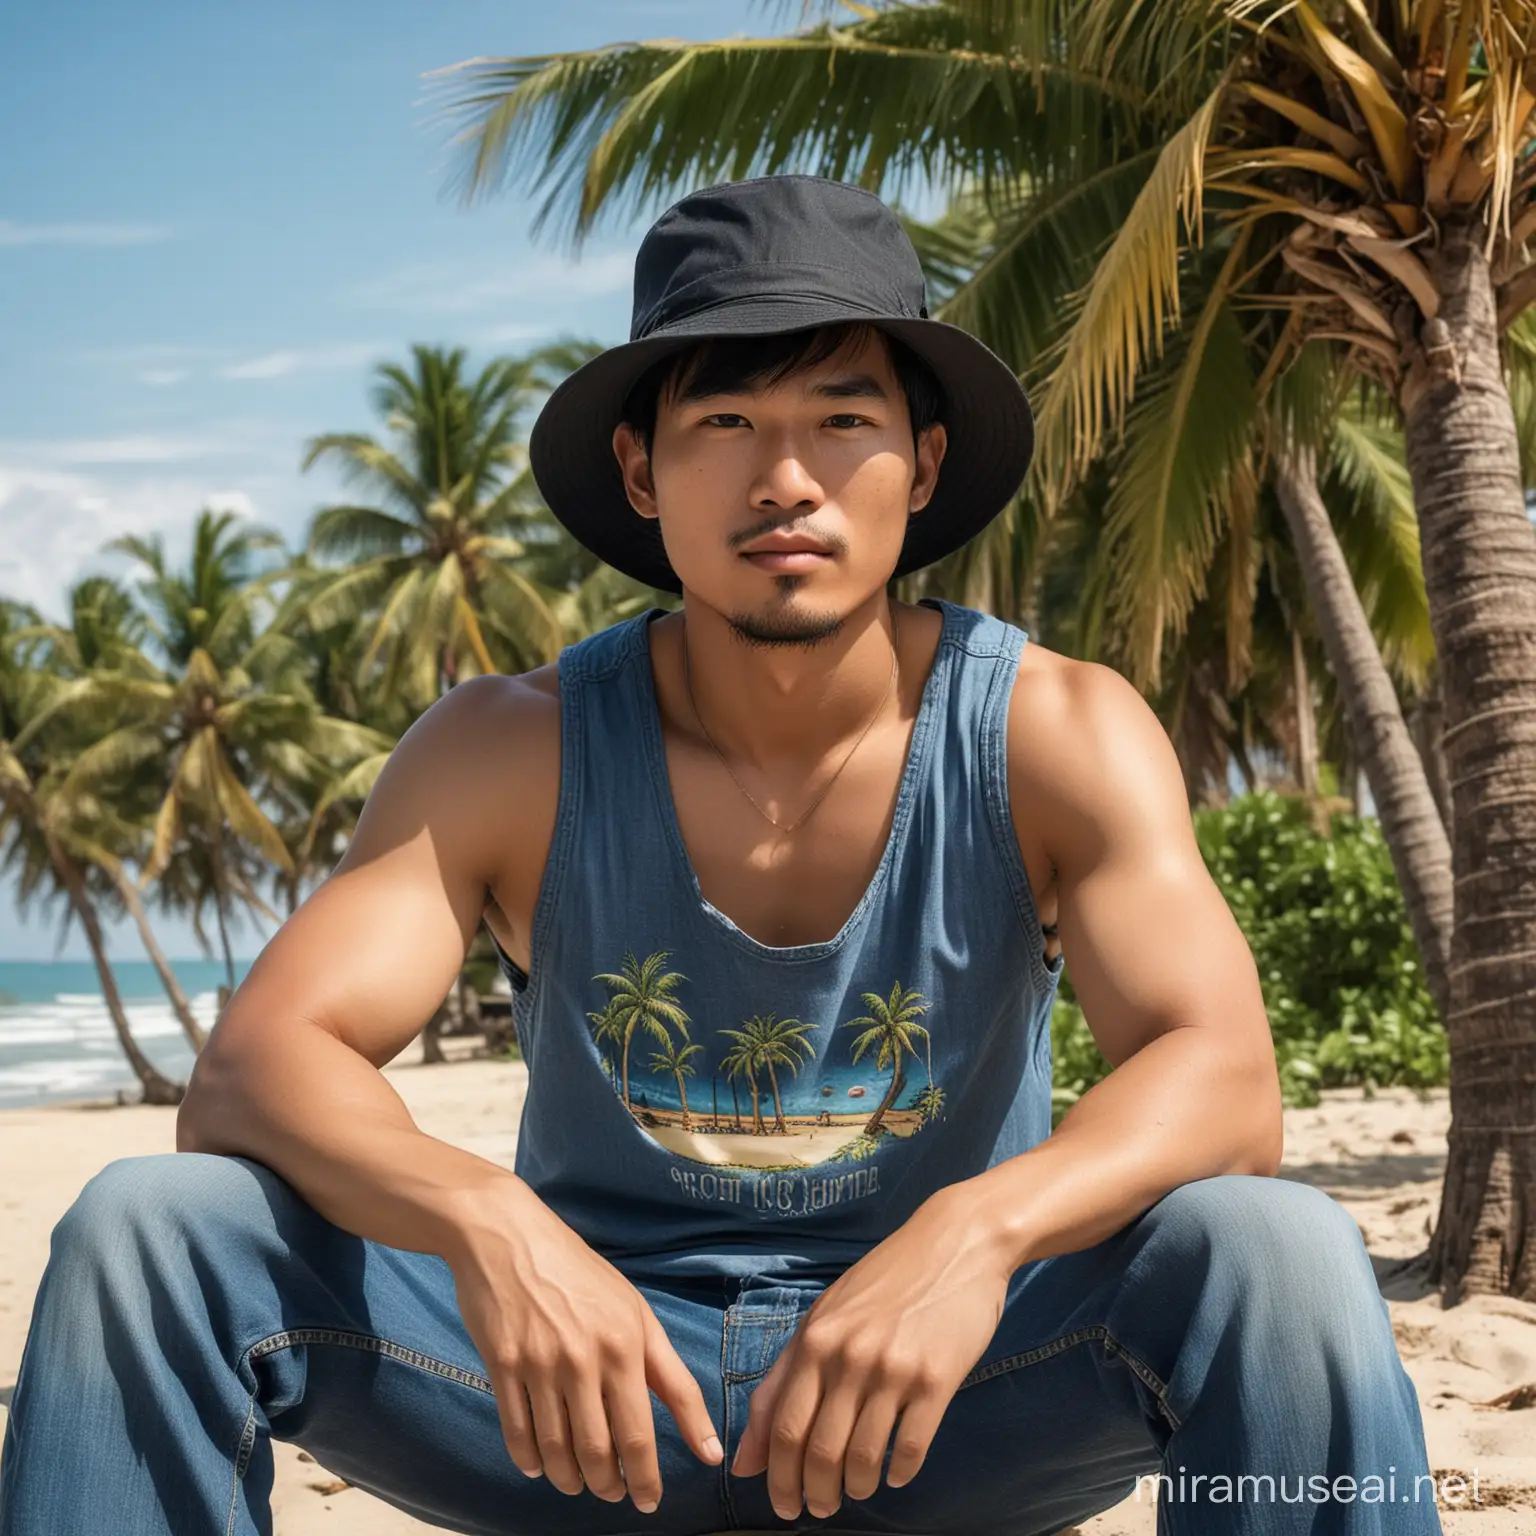 seorang lelaki asia memakai bucket hitam,baju singlet warna biru dan celana jeans sedang duduk di tepi pantai ada pohon kelapa siang hari ,dan sangat detail, sangat jernih, resolusi tinggi, penuh warna.